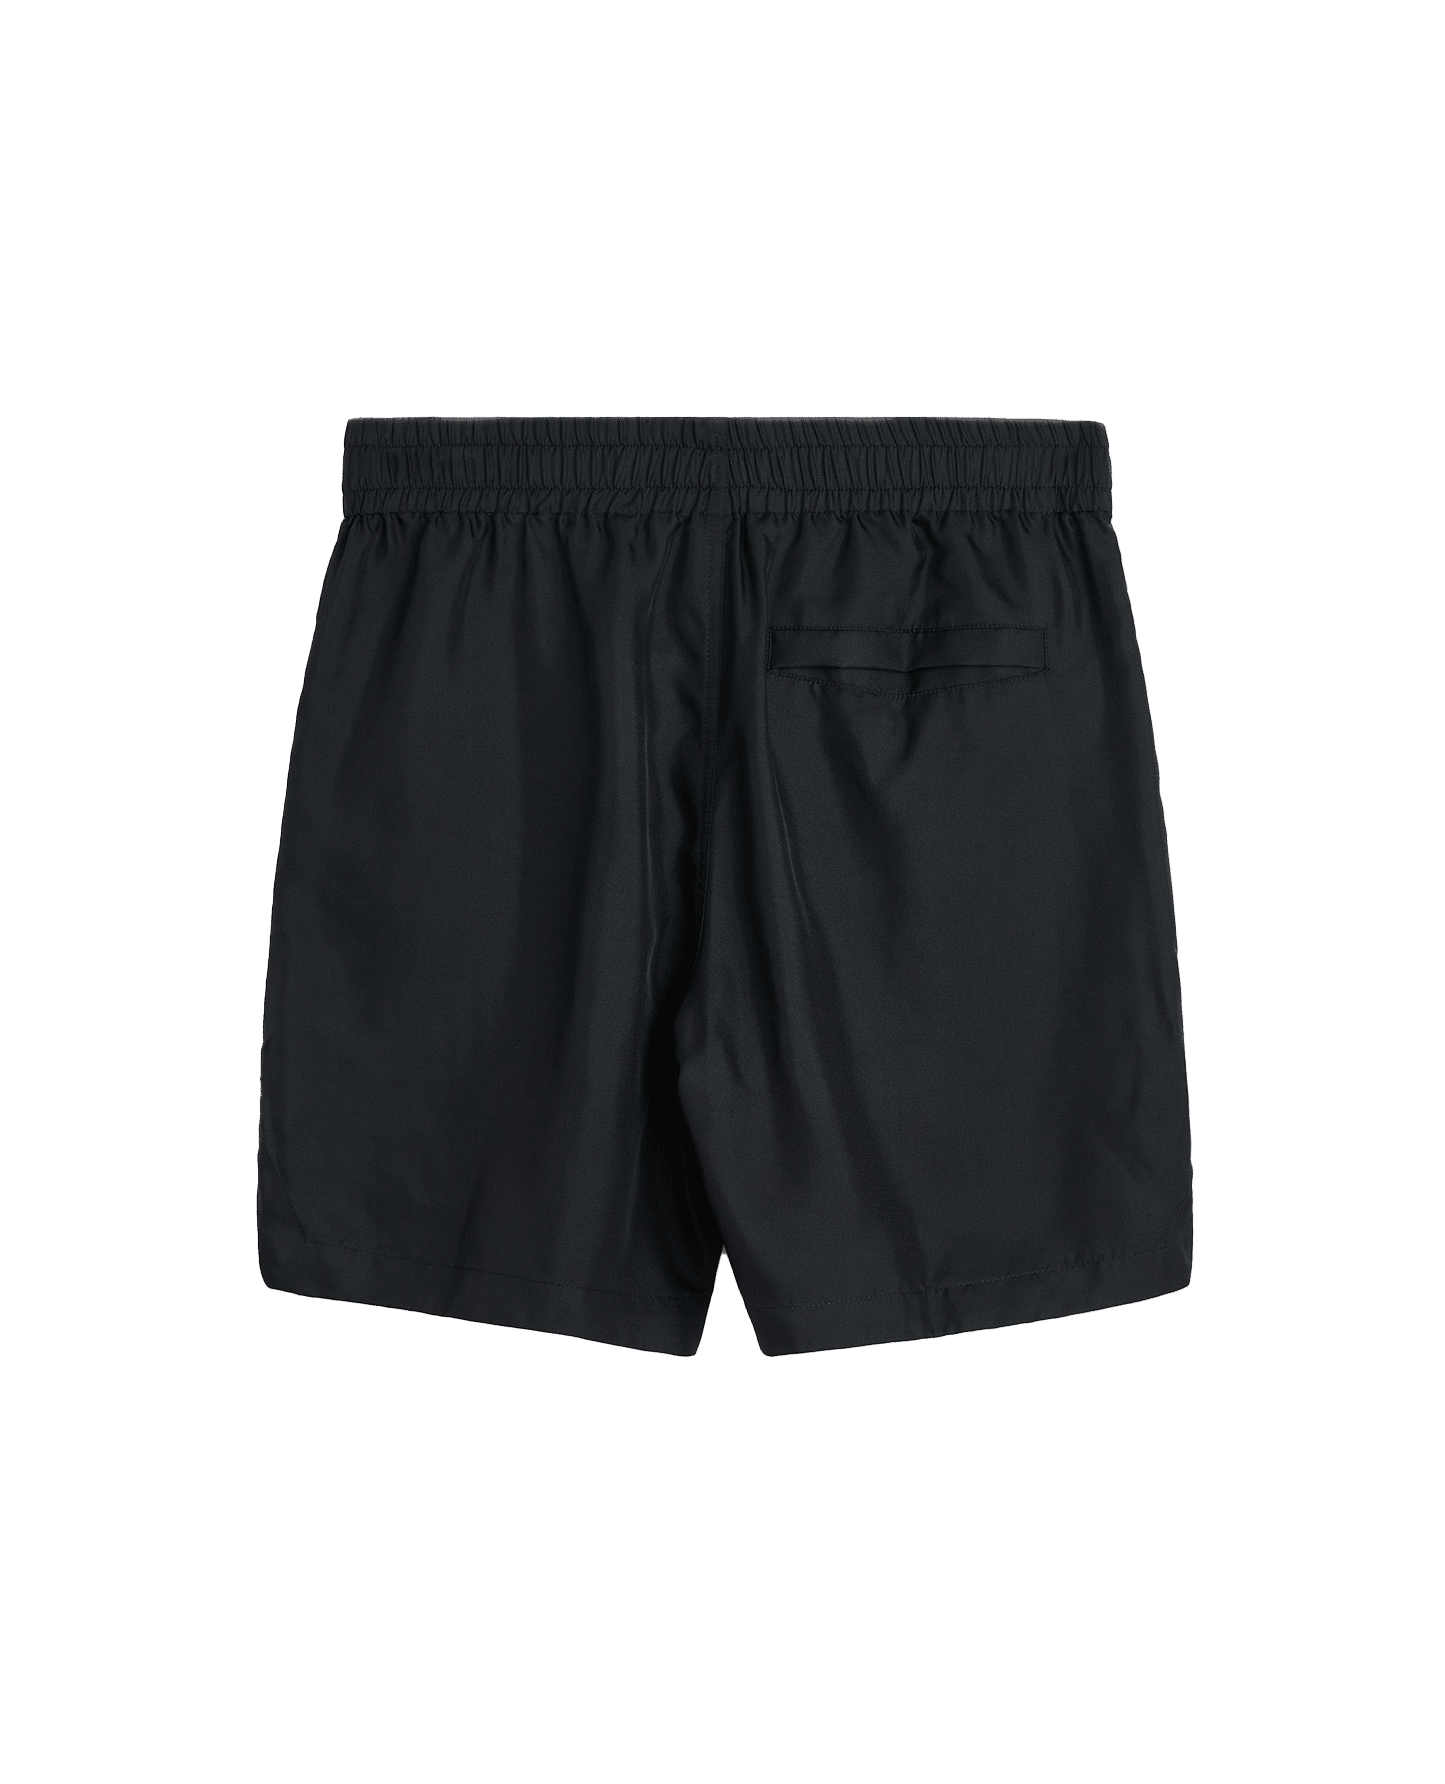 SUNFLOWER 4133 Silk Shorts - Black Back